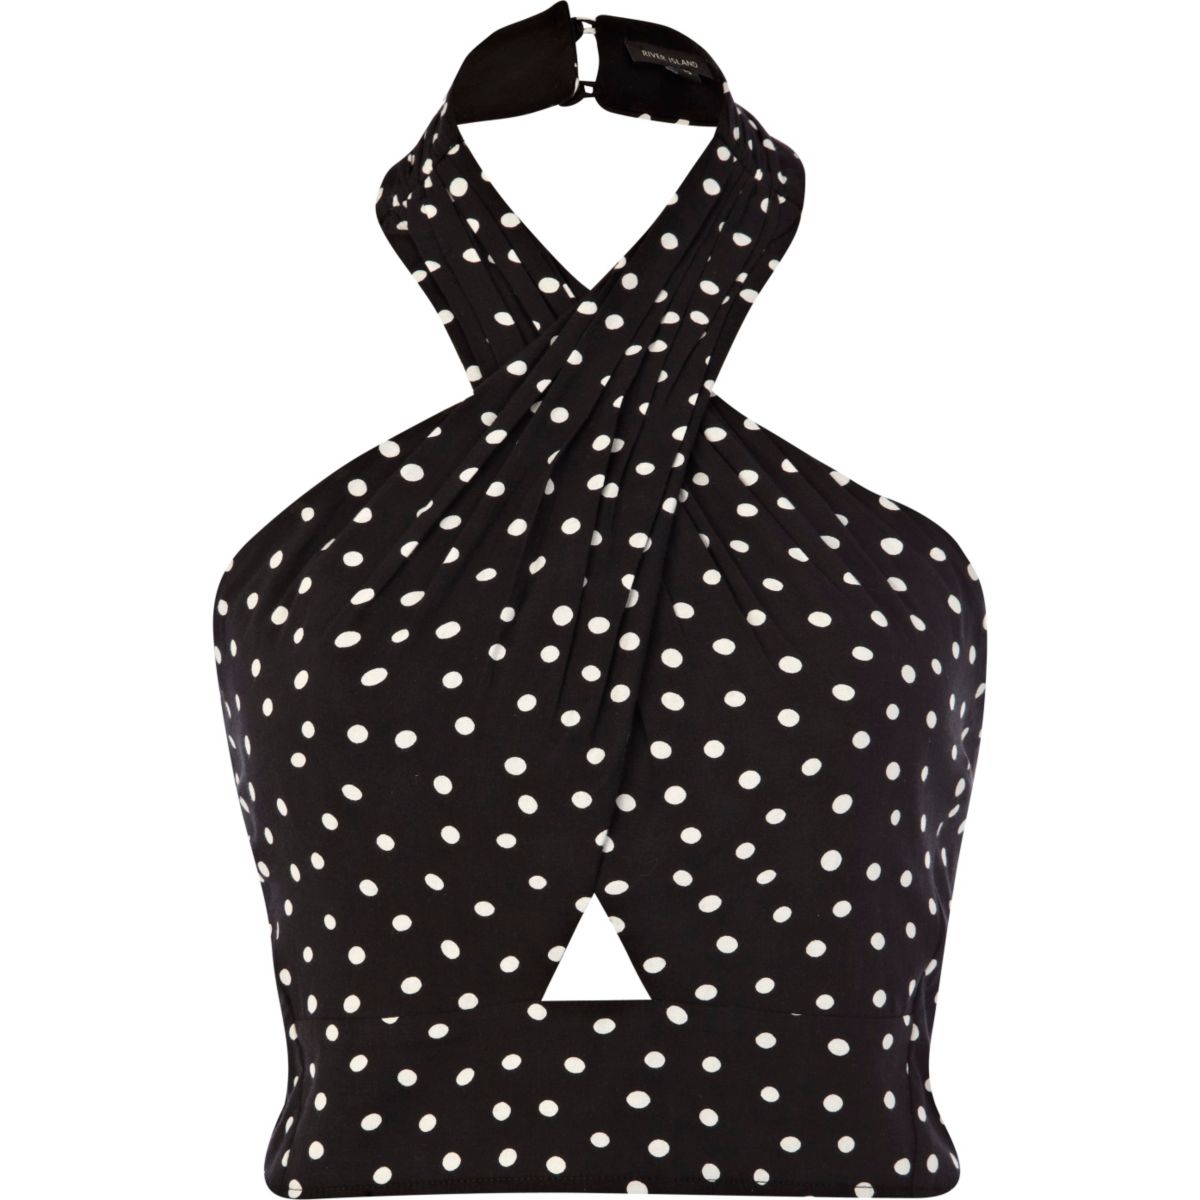 Black and white polka dot halter crop top - Tops - Sale - women